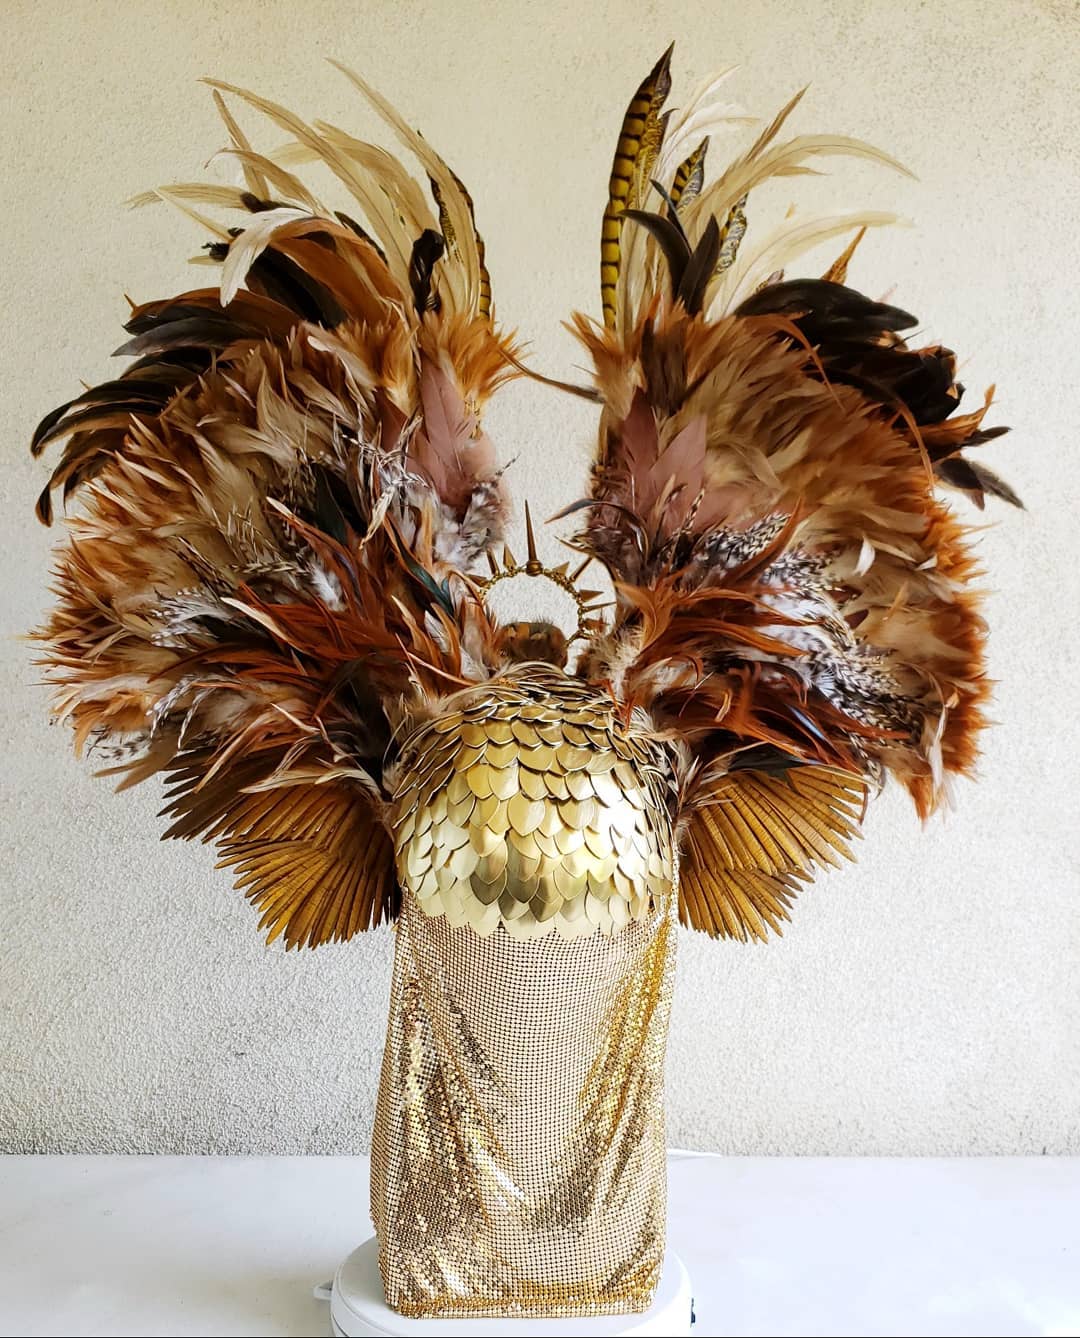 Valkyrie Feather Headdress - Festival Headdress, Mardi Gras Headress